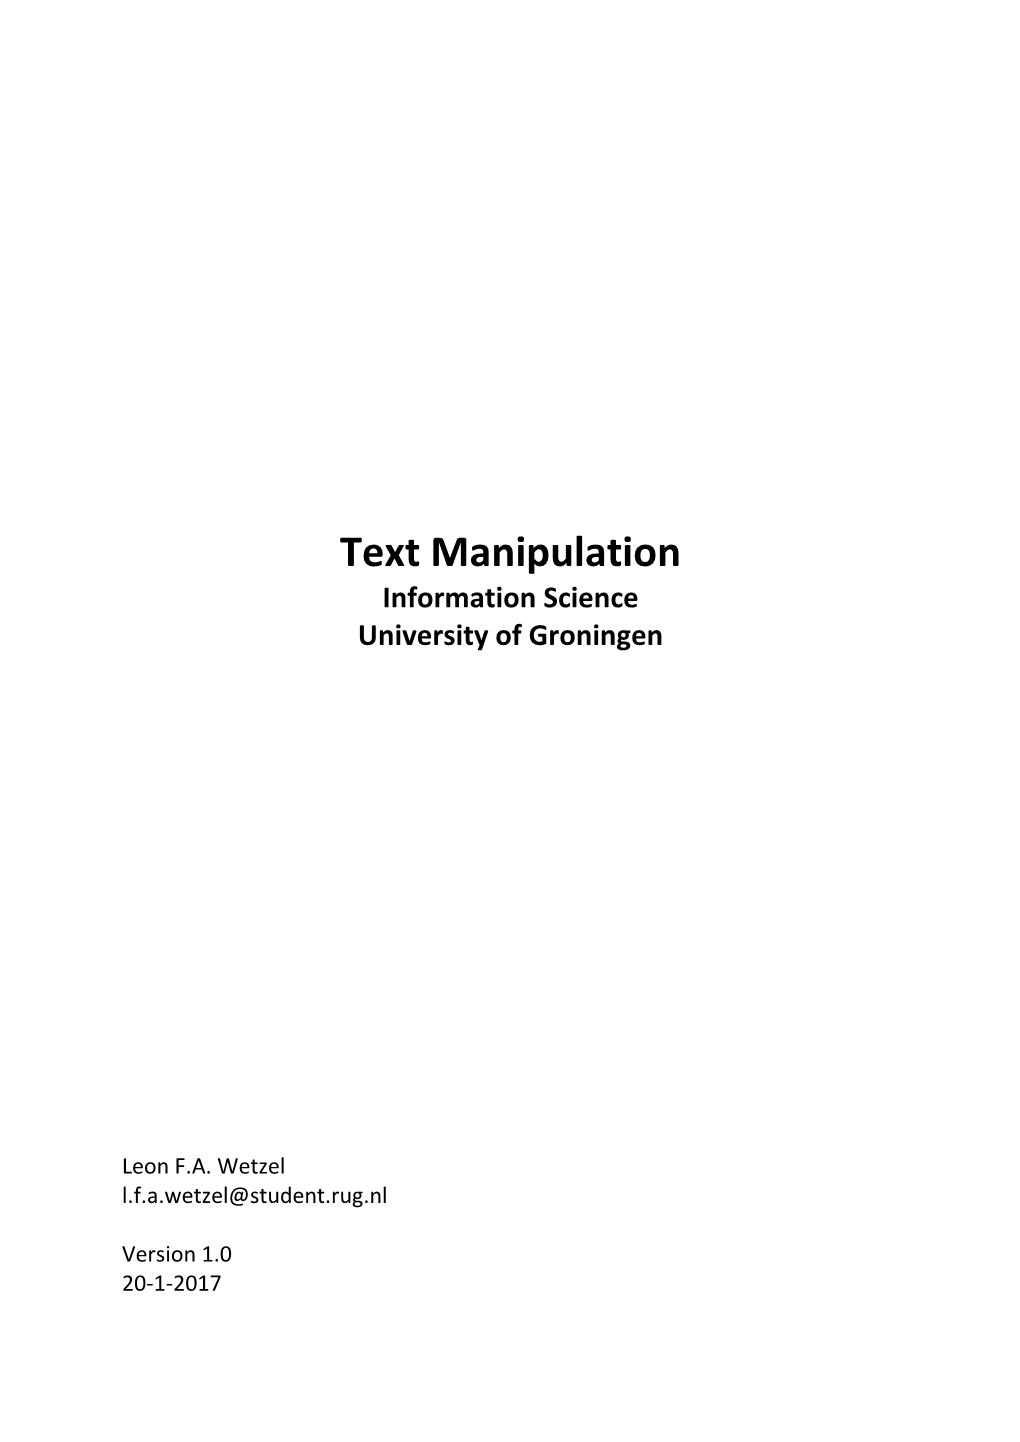 Text Manipulation Information Science University of Groningen